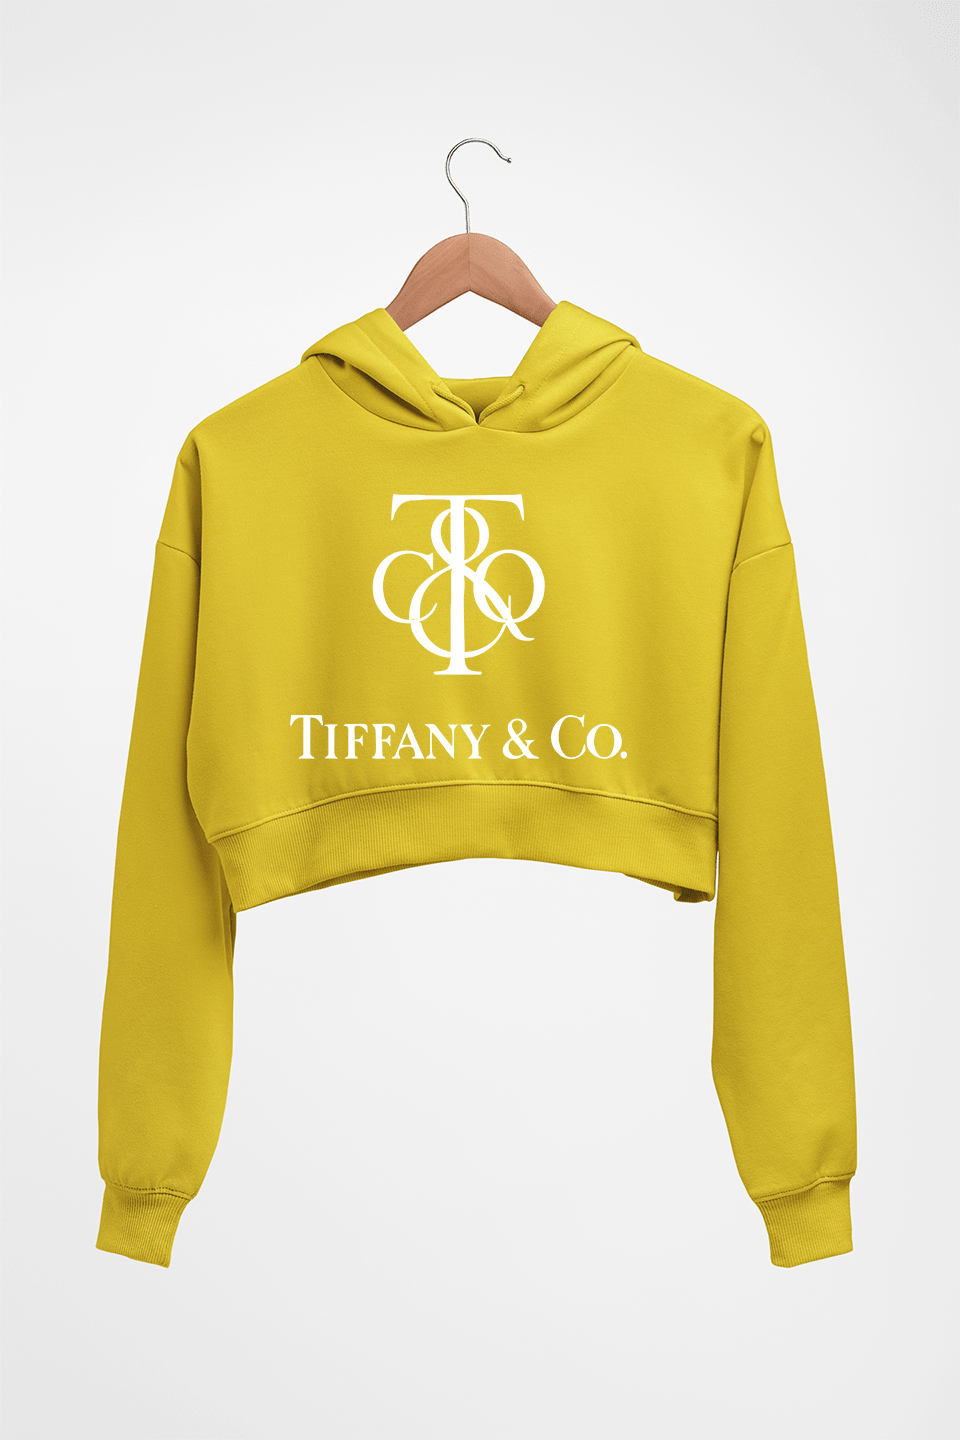 Tiffany & Co Crop HOODIE FOR WOMEN